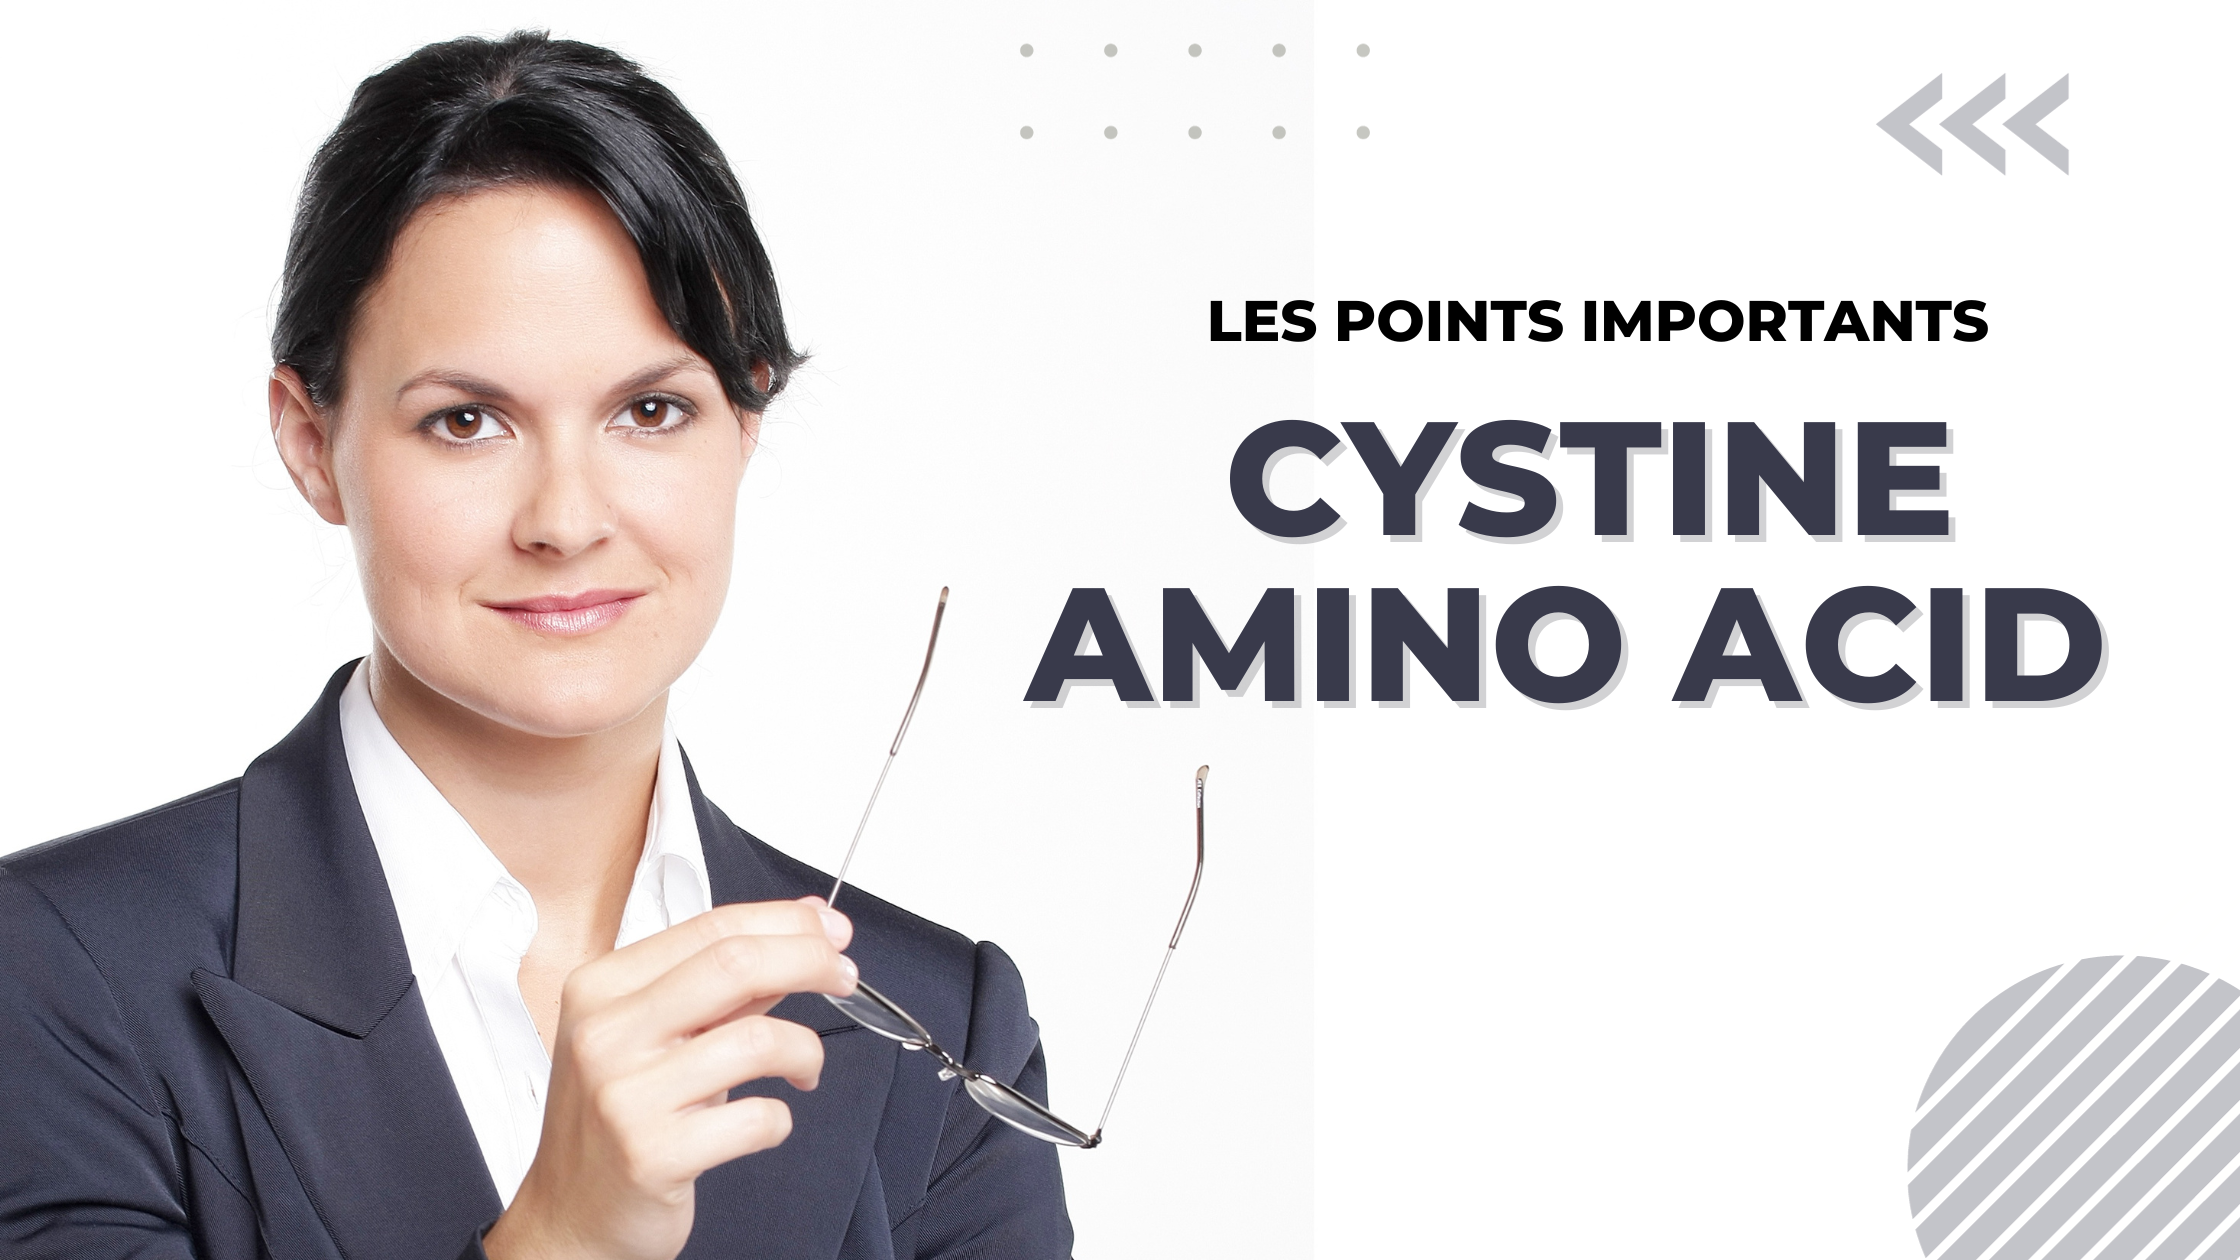 cystine amino acid | Les points importants